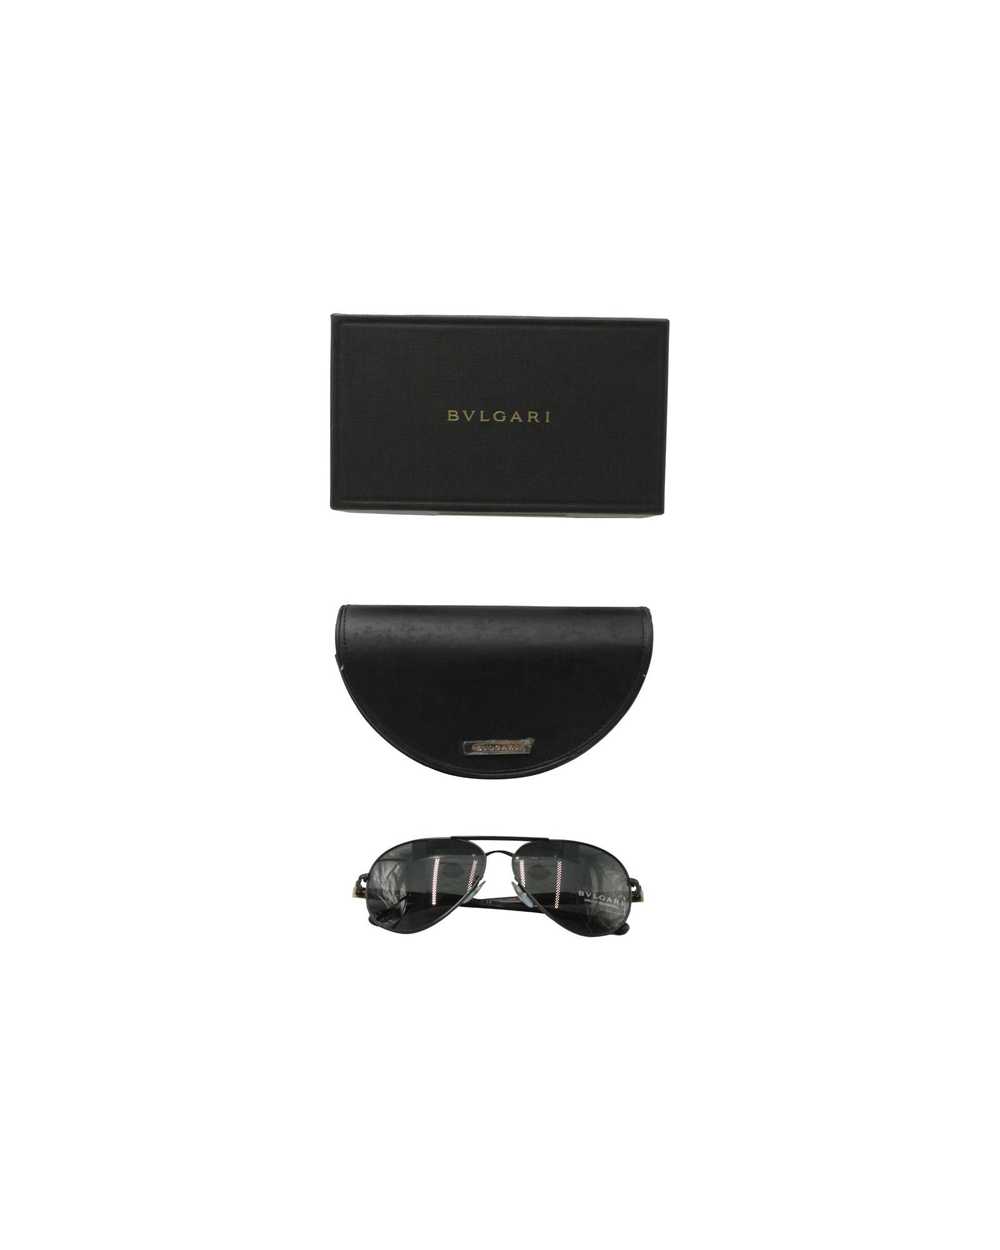 Product Details Bvlgari Black Aviator Sunglasses - image 5